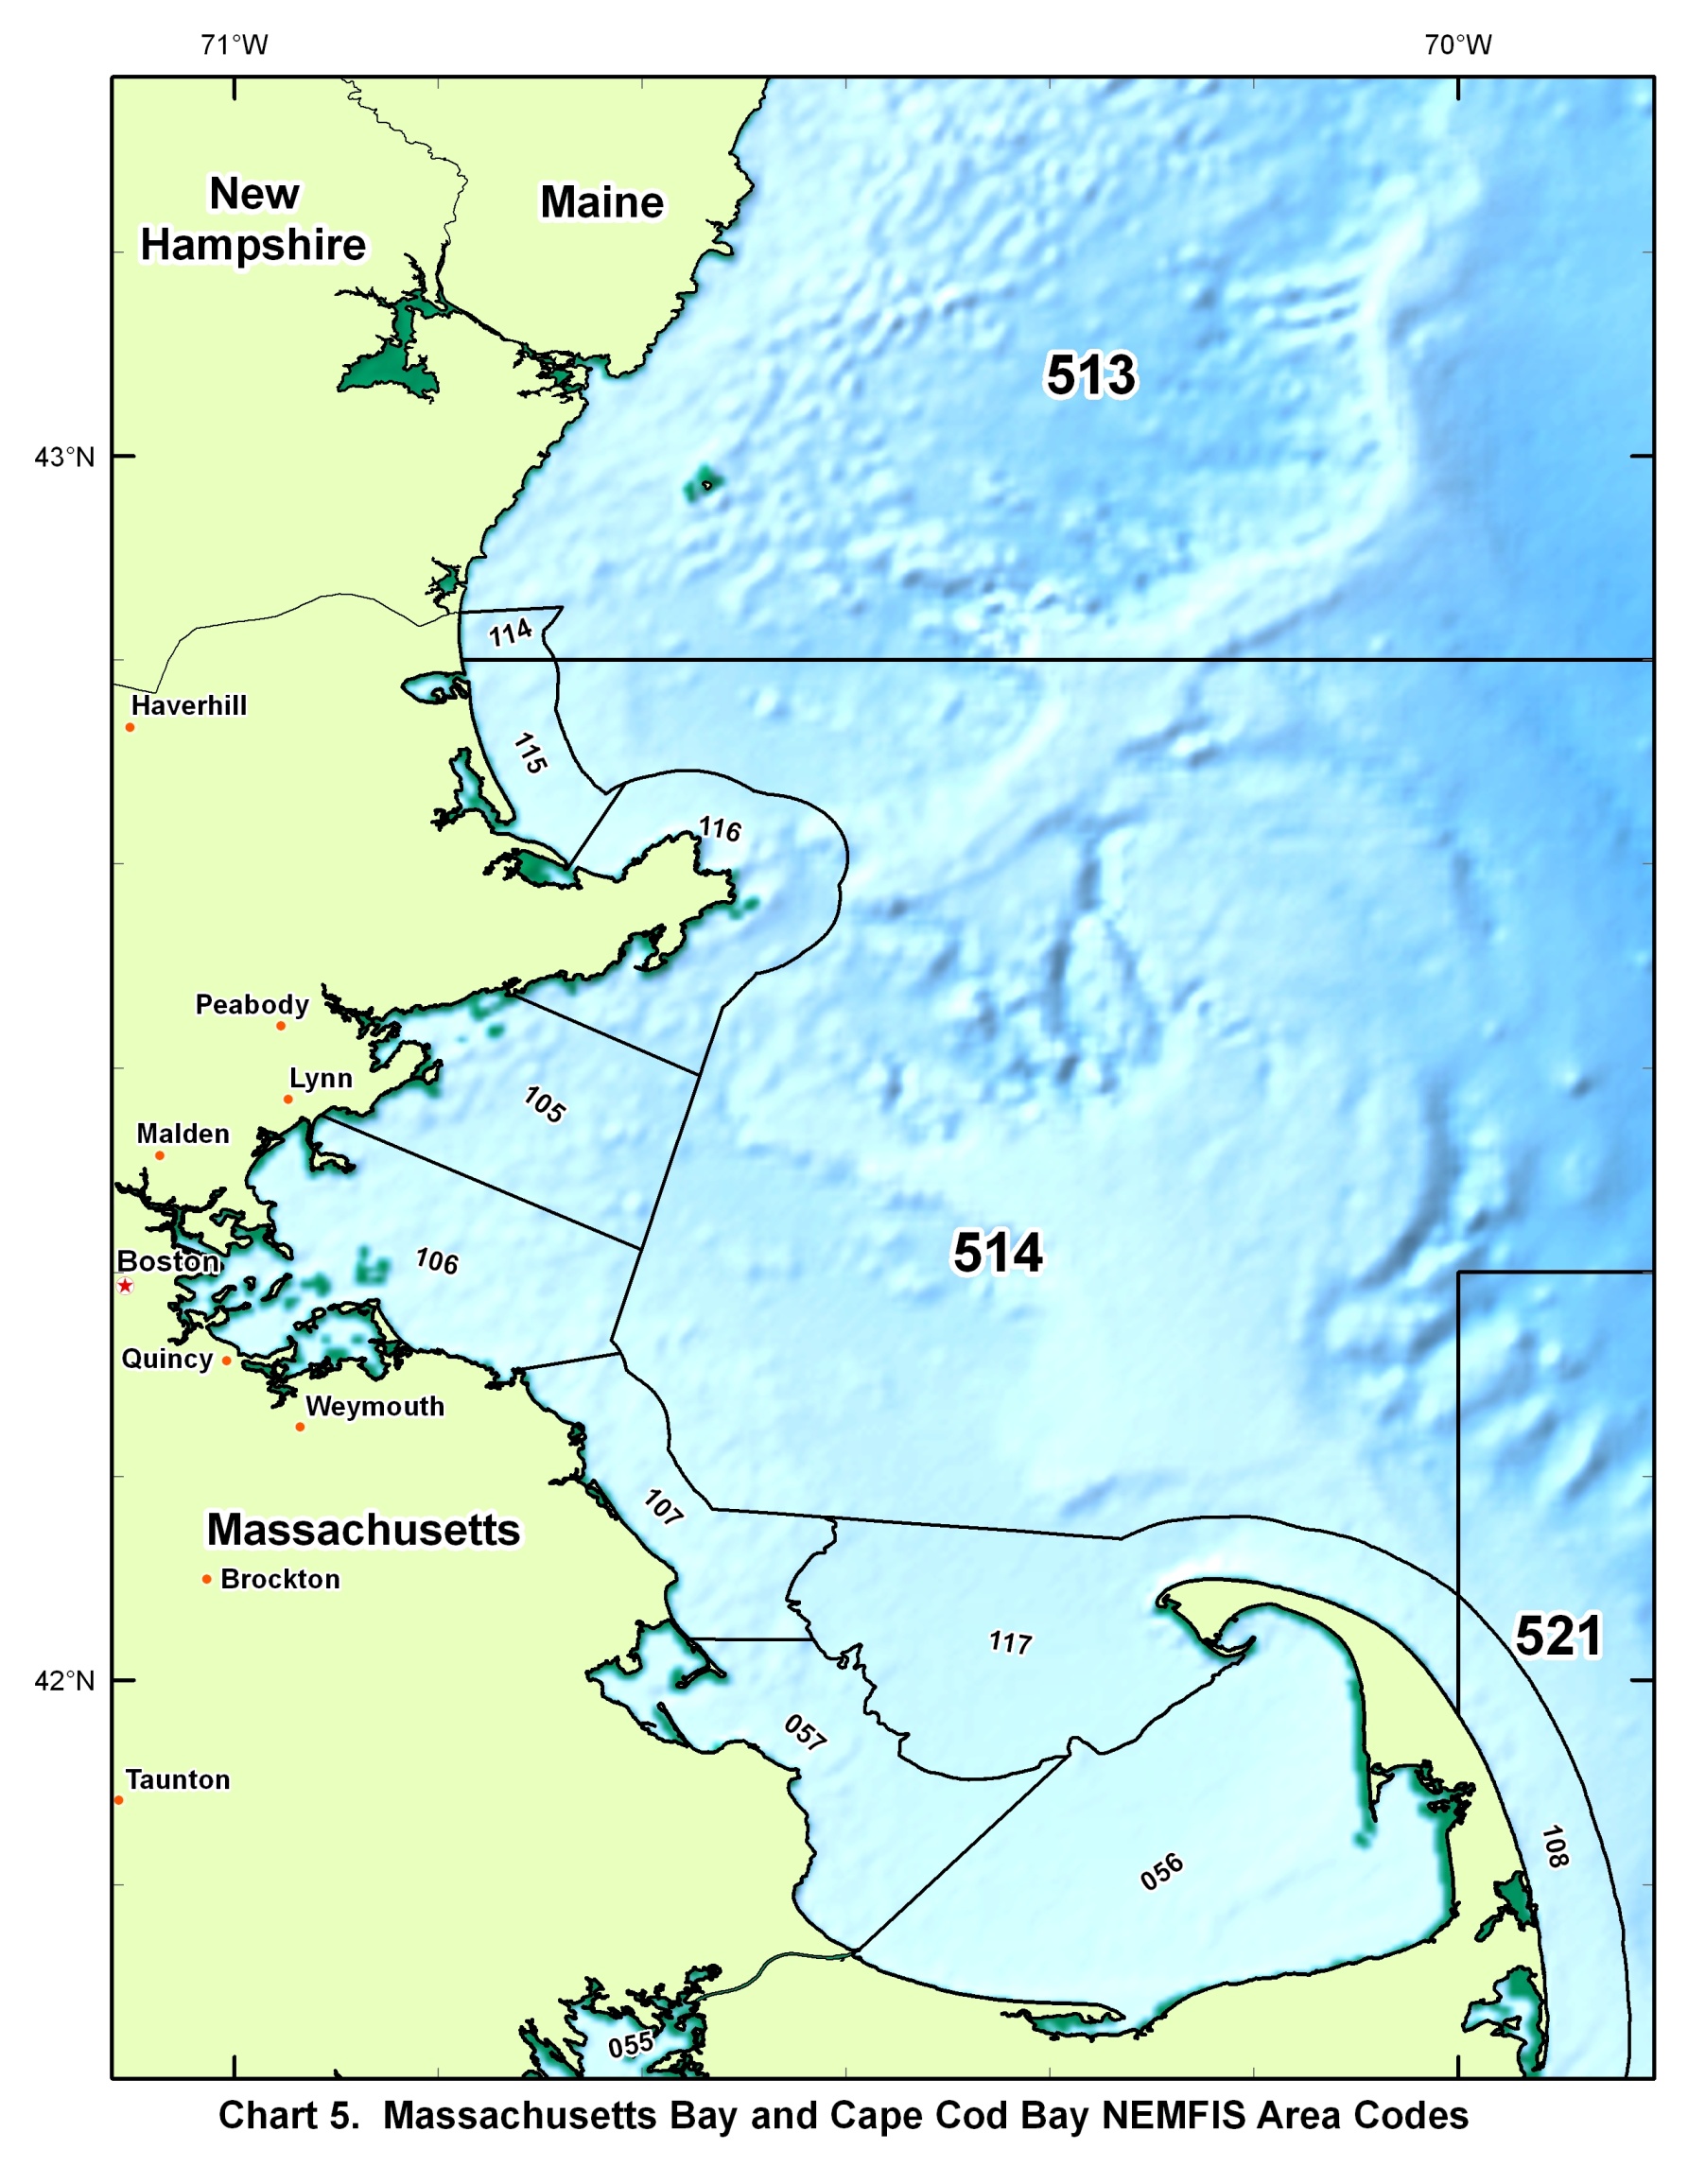 Chart 5 - Mass Bay and Cape Cod Bay NEMFIS Area Codes